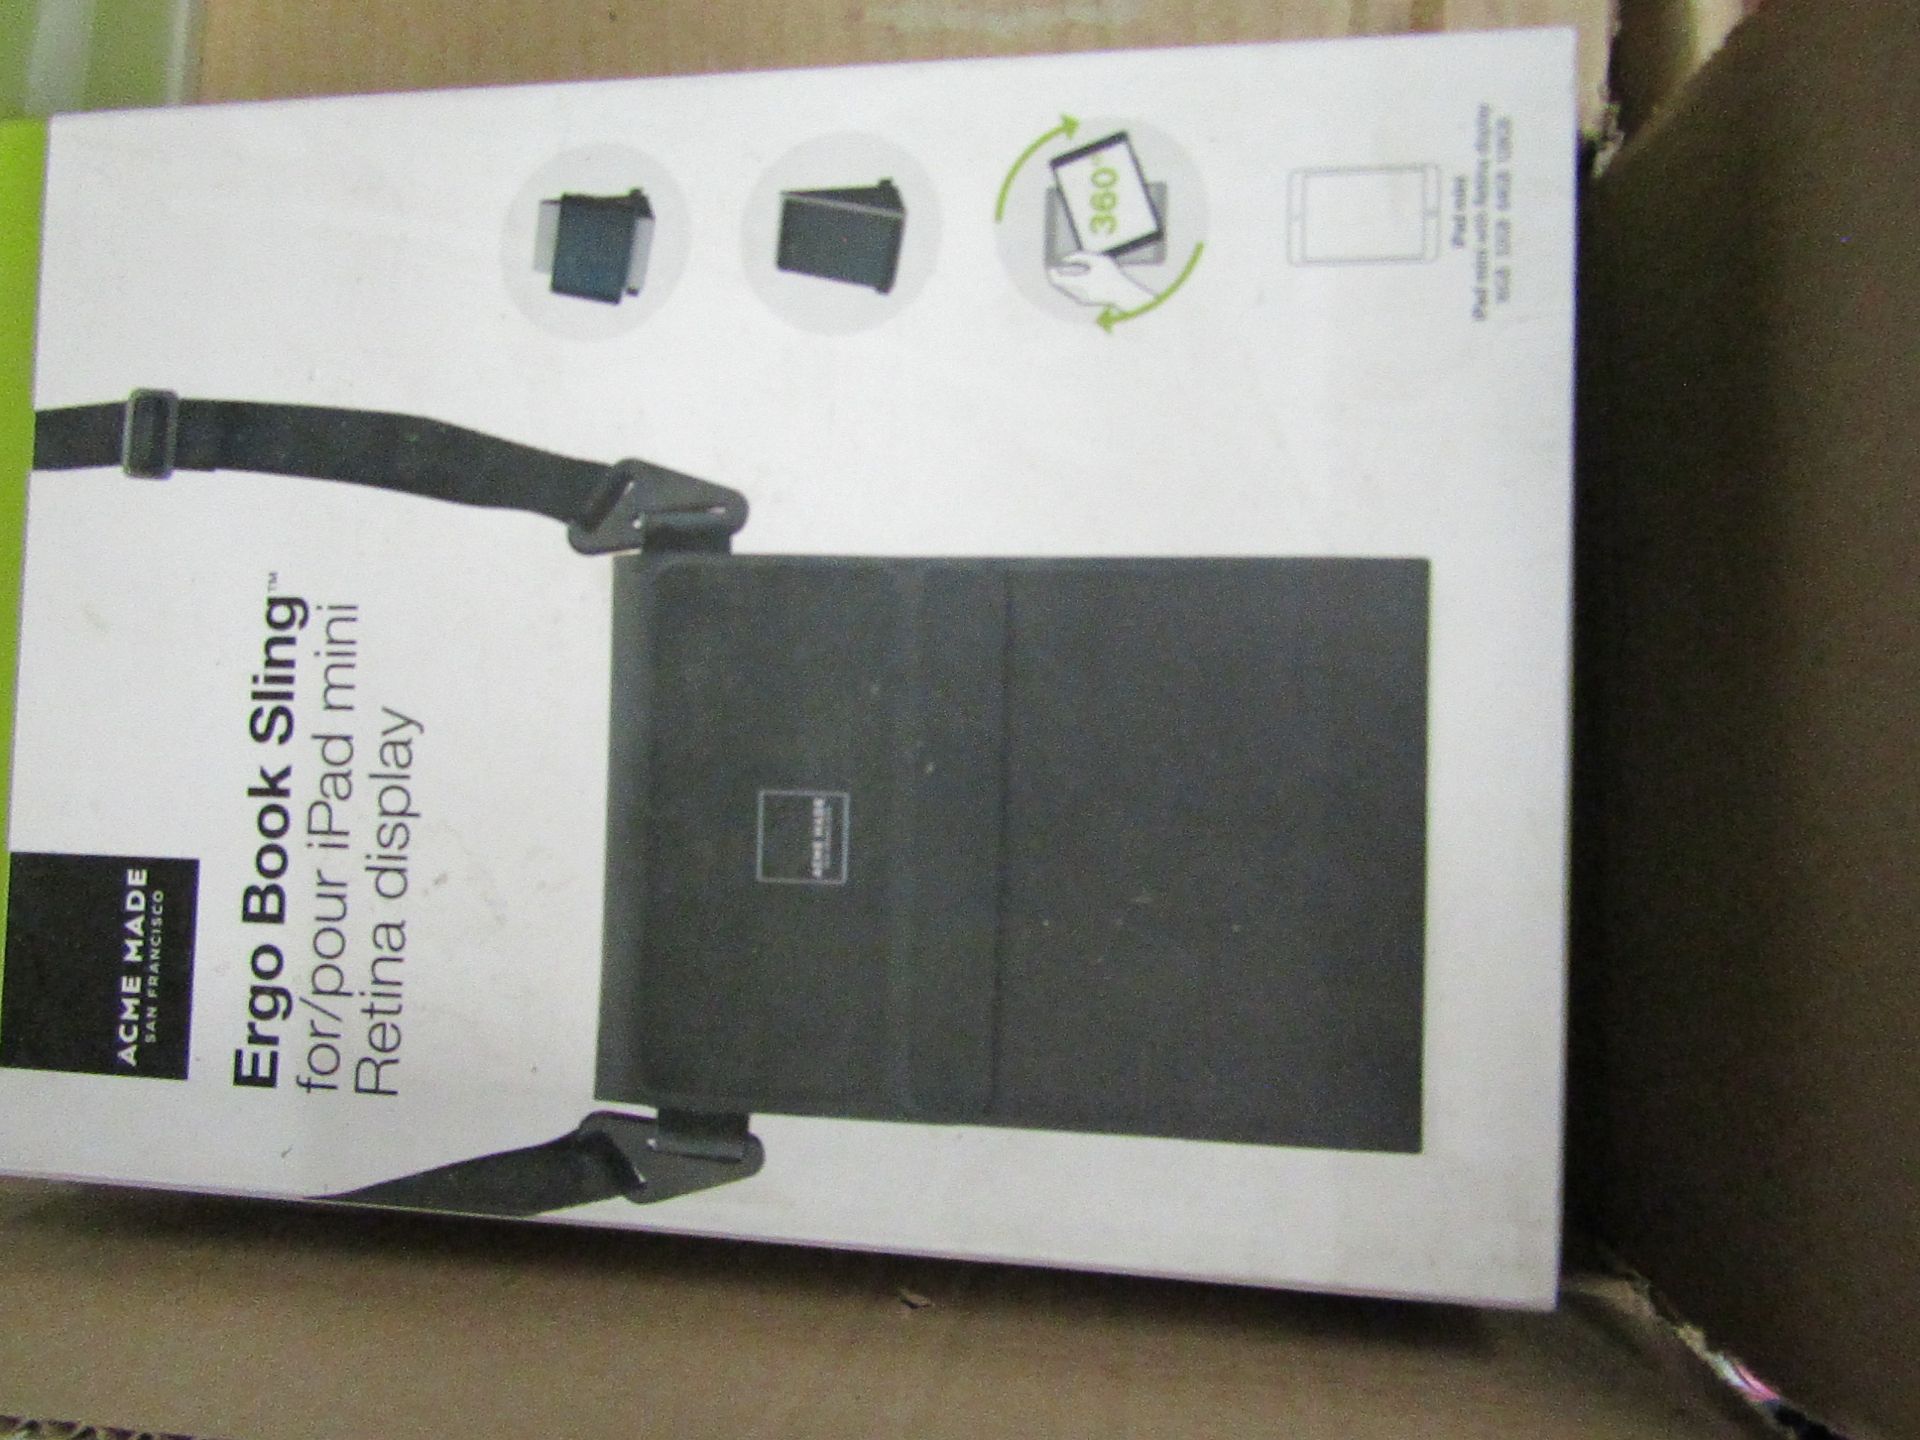 10 x ergo book sling for ipad mini,new in box